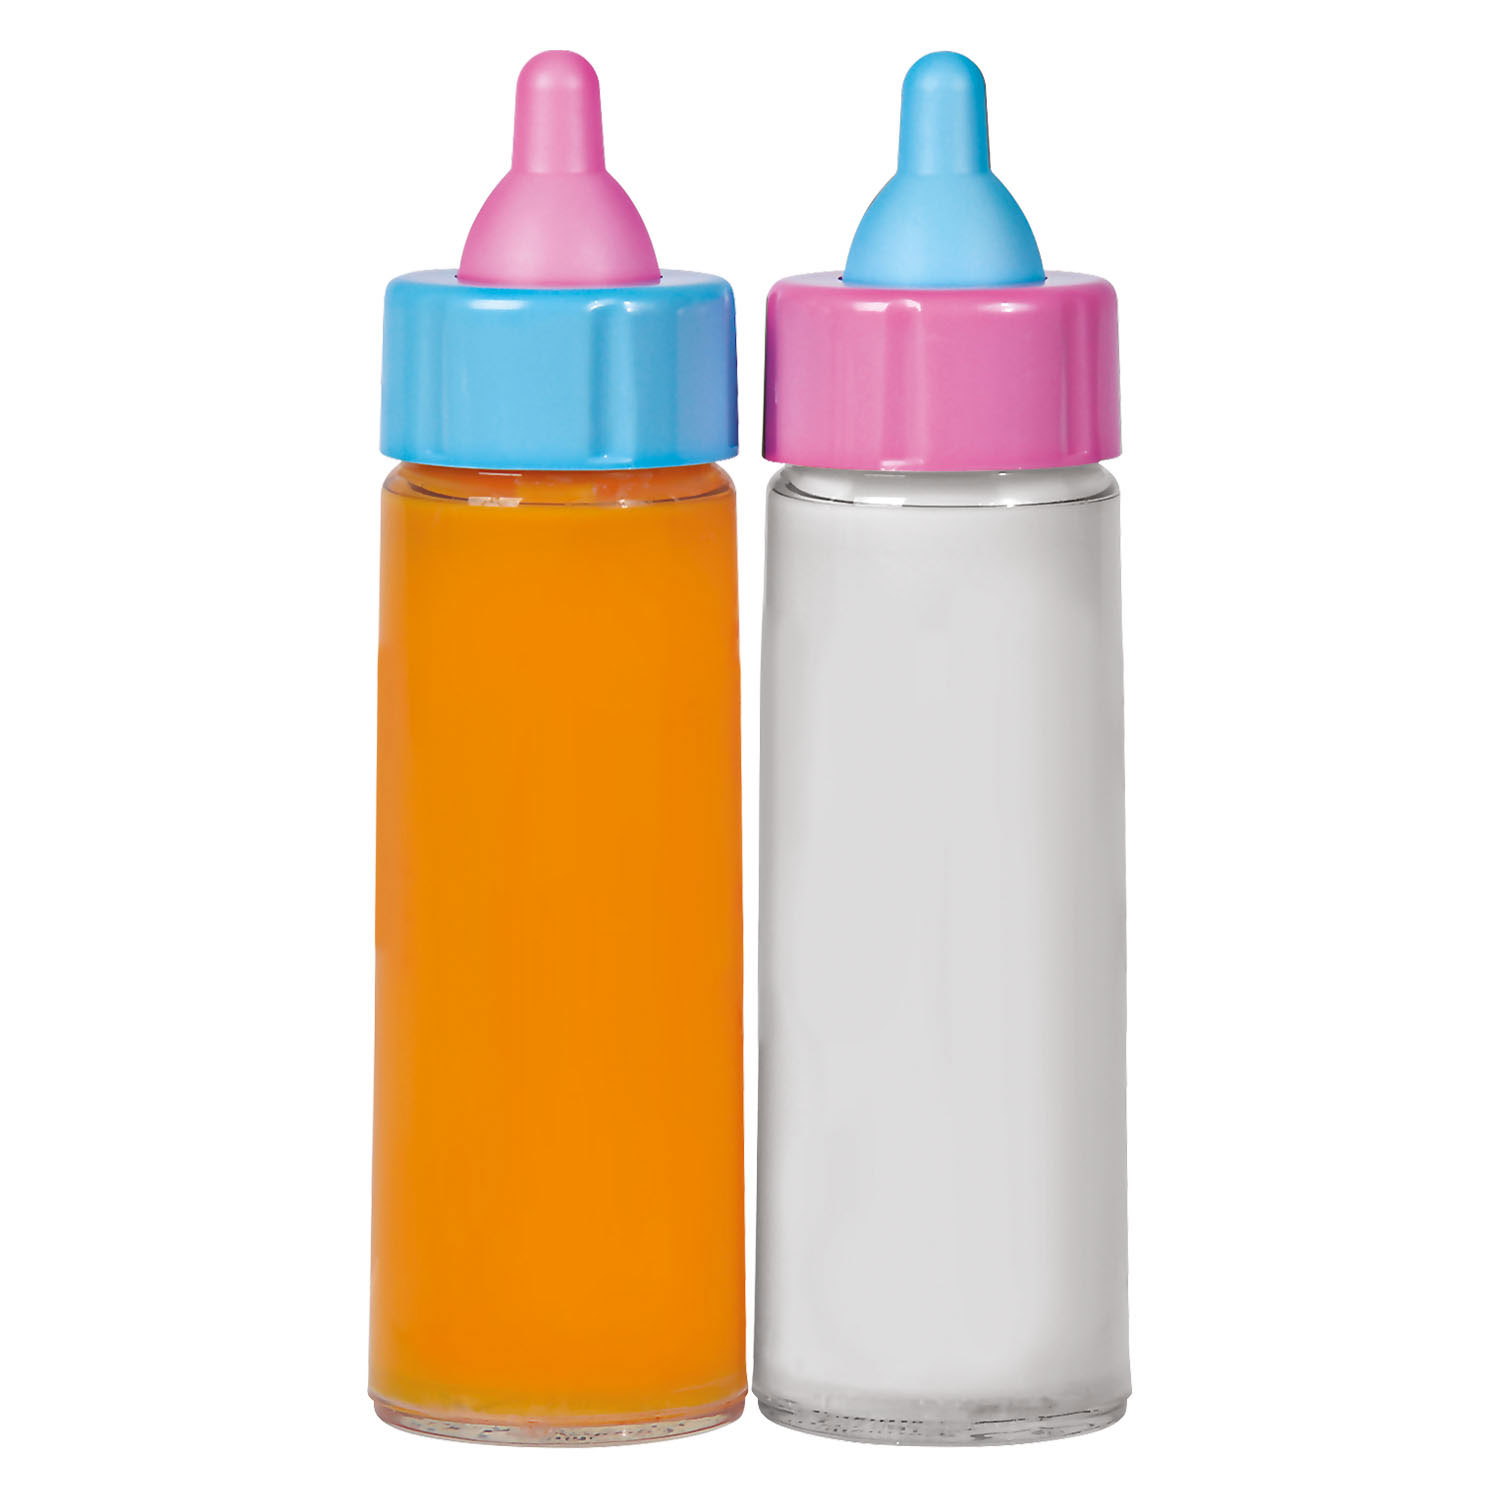 New Born Baby Magic Trinkflaschen, 2St.